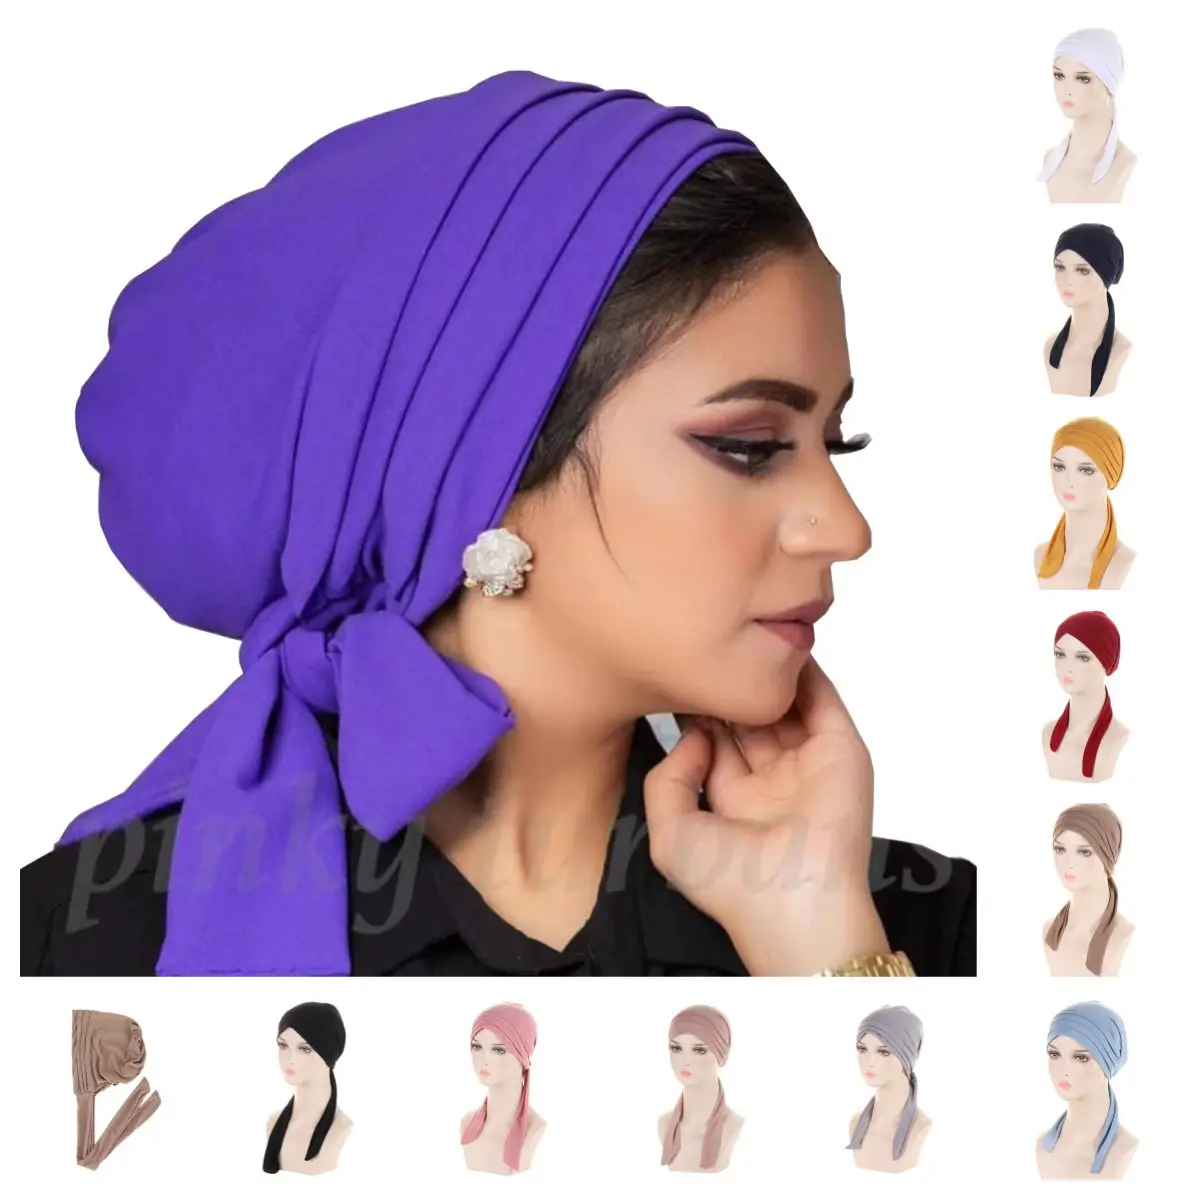 Toptan sıcak satış yeni varış islami türban başörtüsü hint baş şal afrika başörtüsü şapka